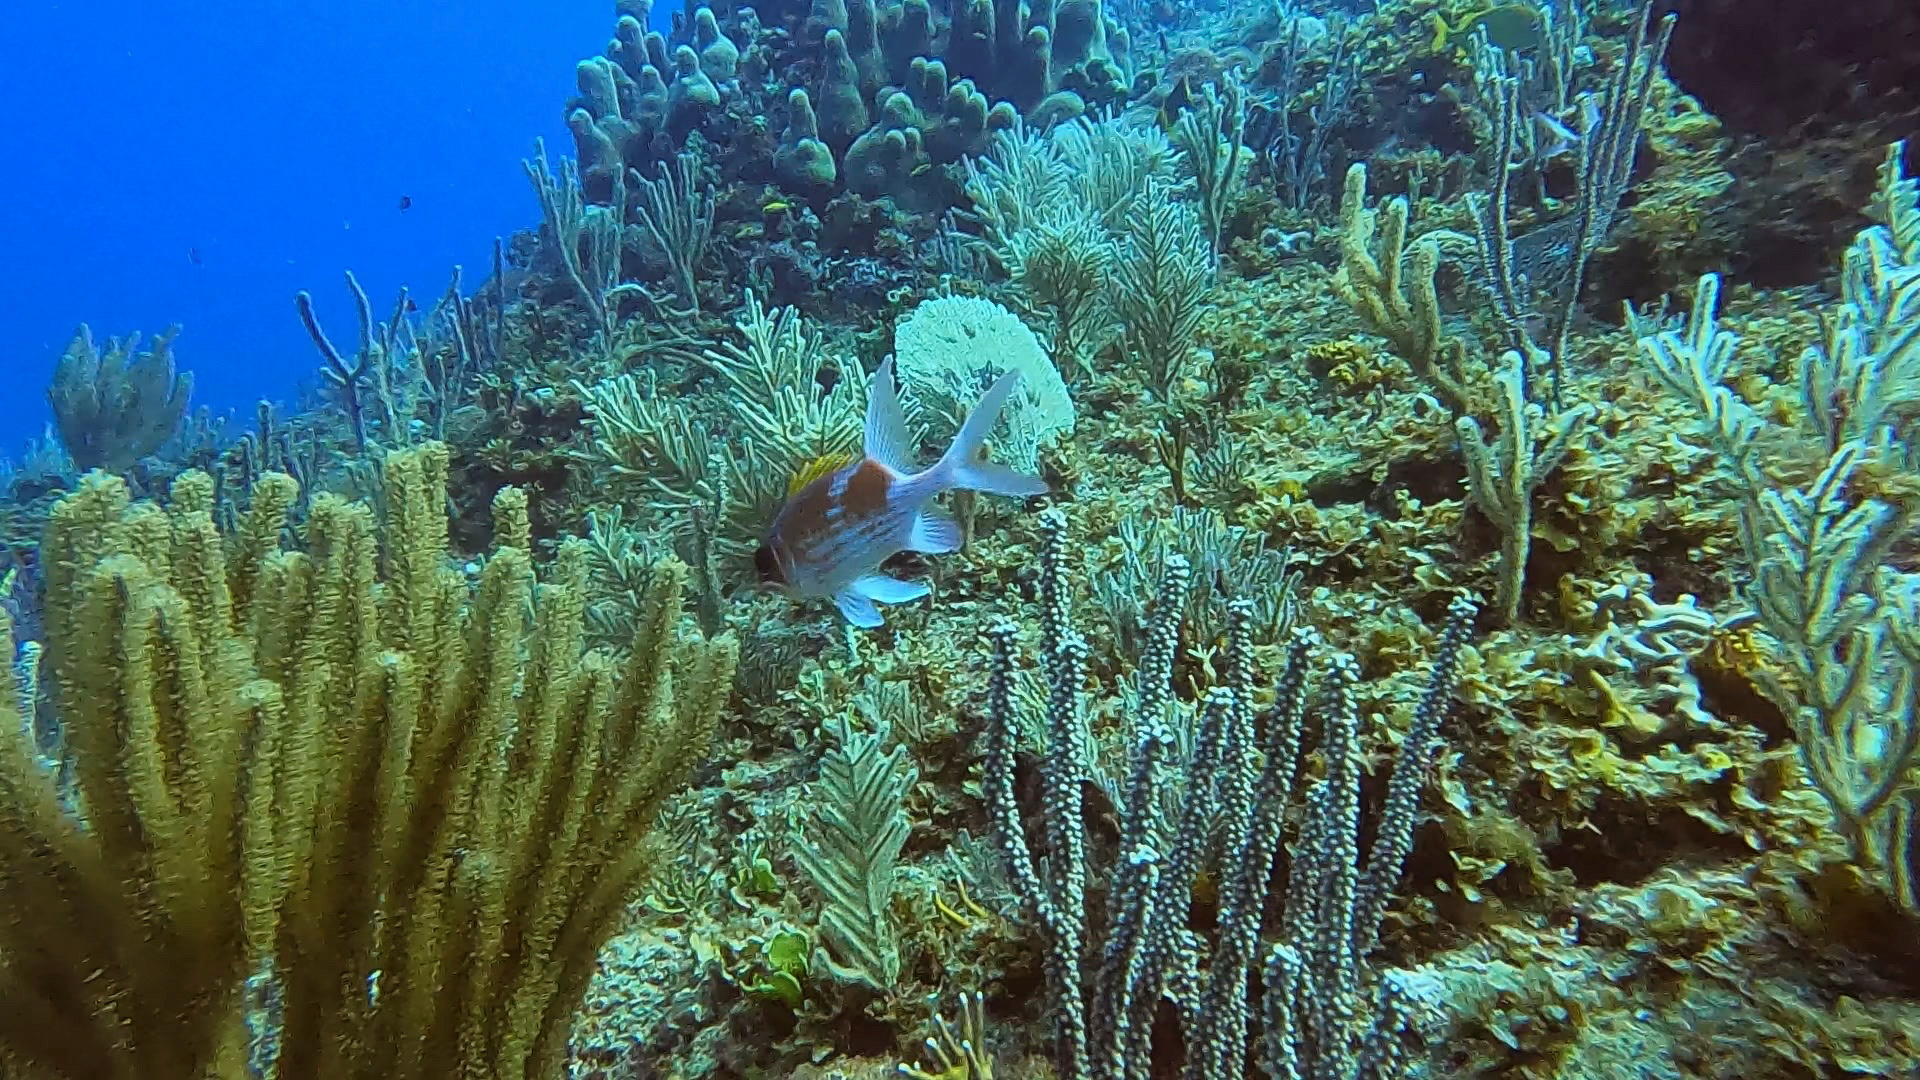 Climate change shrinks marine life richness near equator - study | Reuters